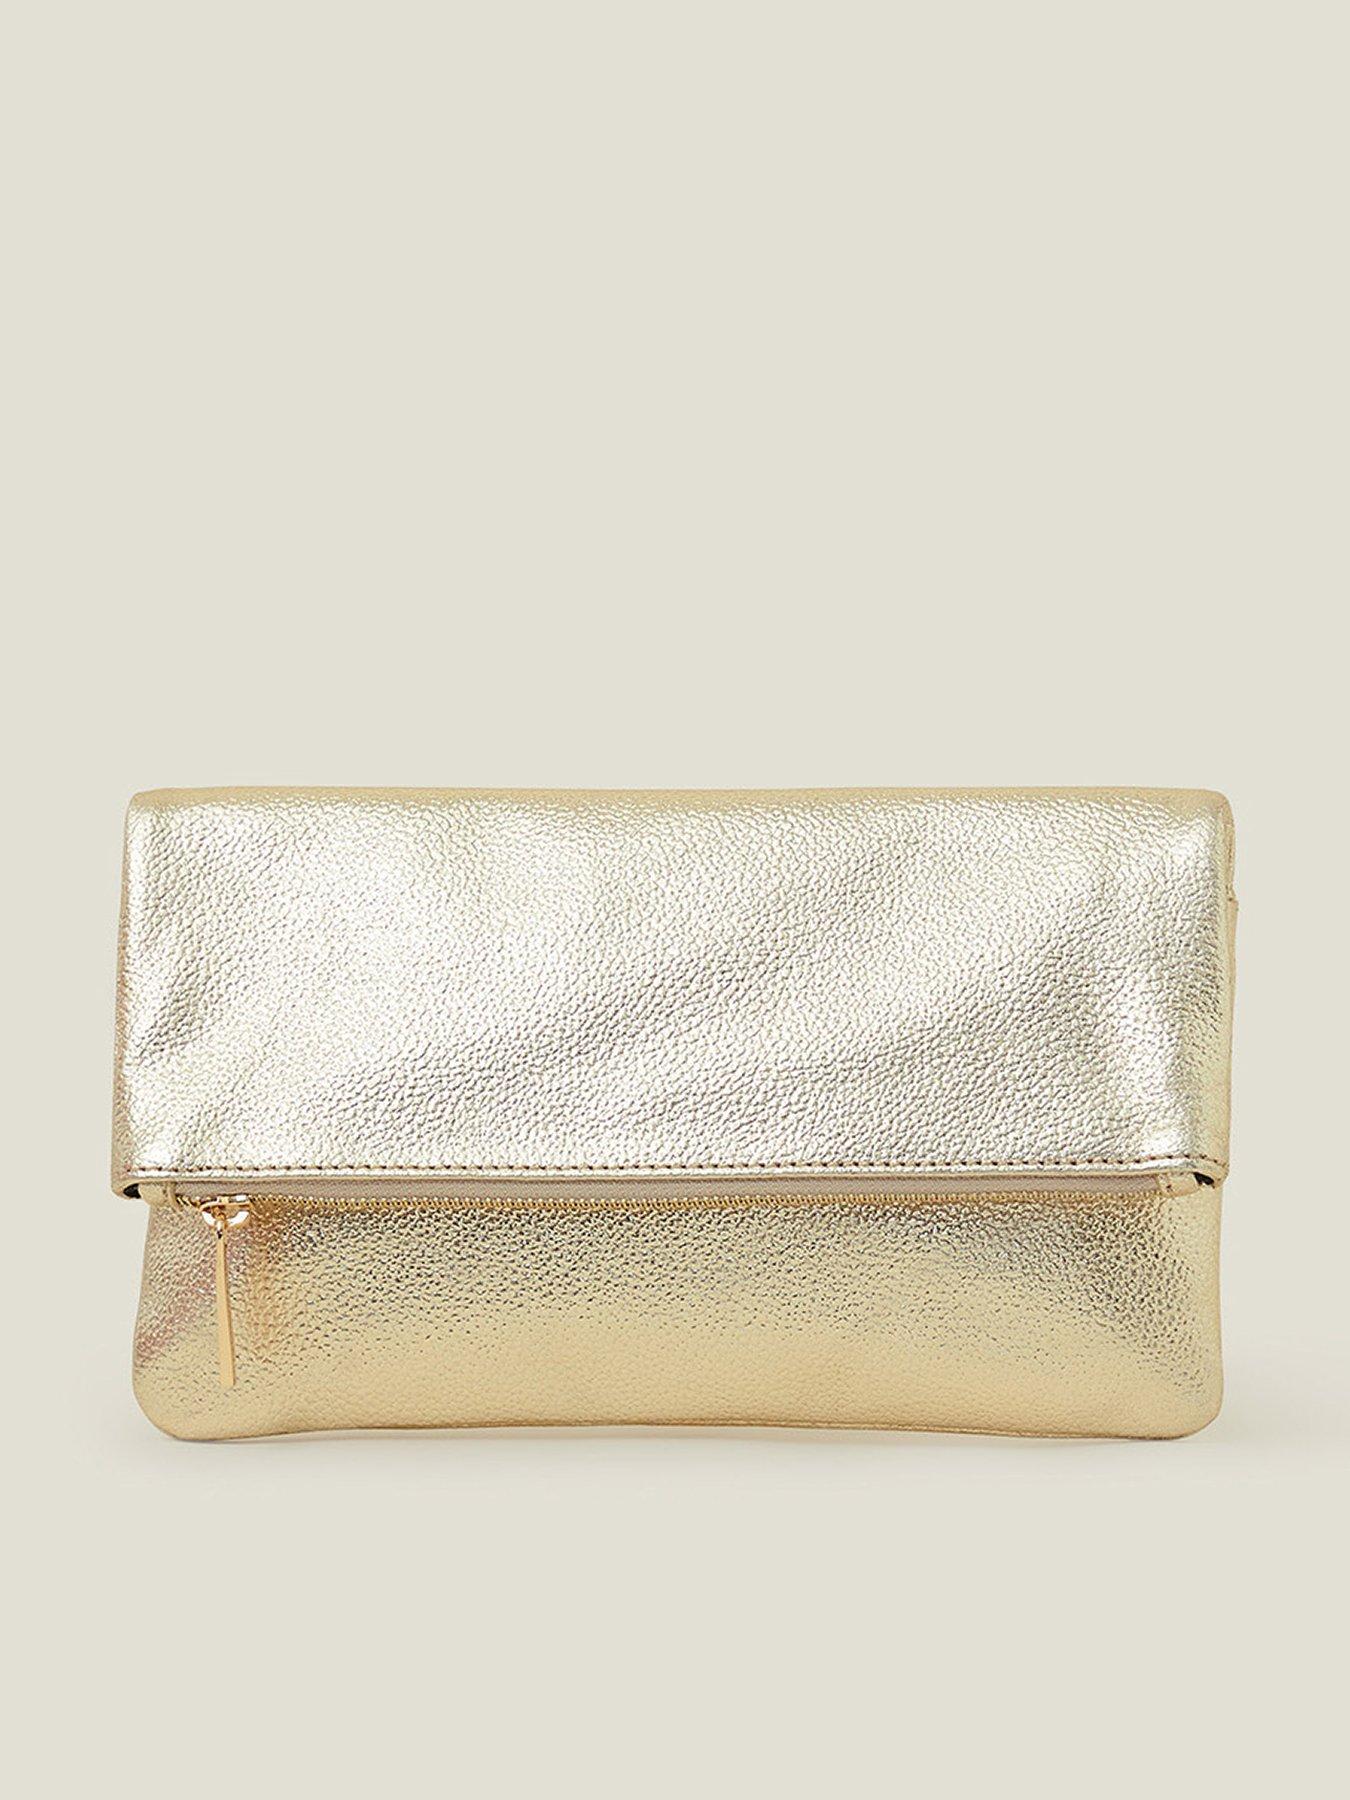 Vintage Whiting & Davis Gold Mesh Evening Handbag - Daisy Lain